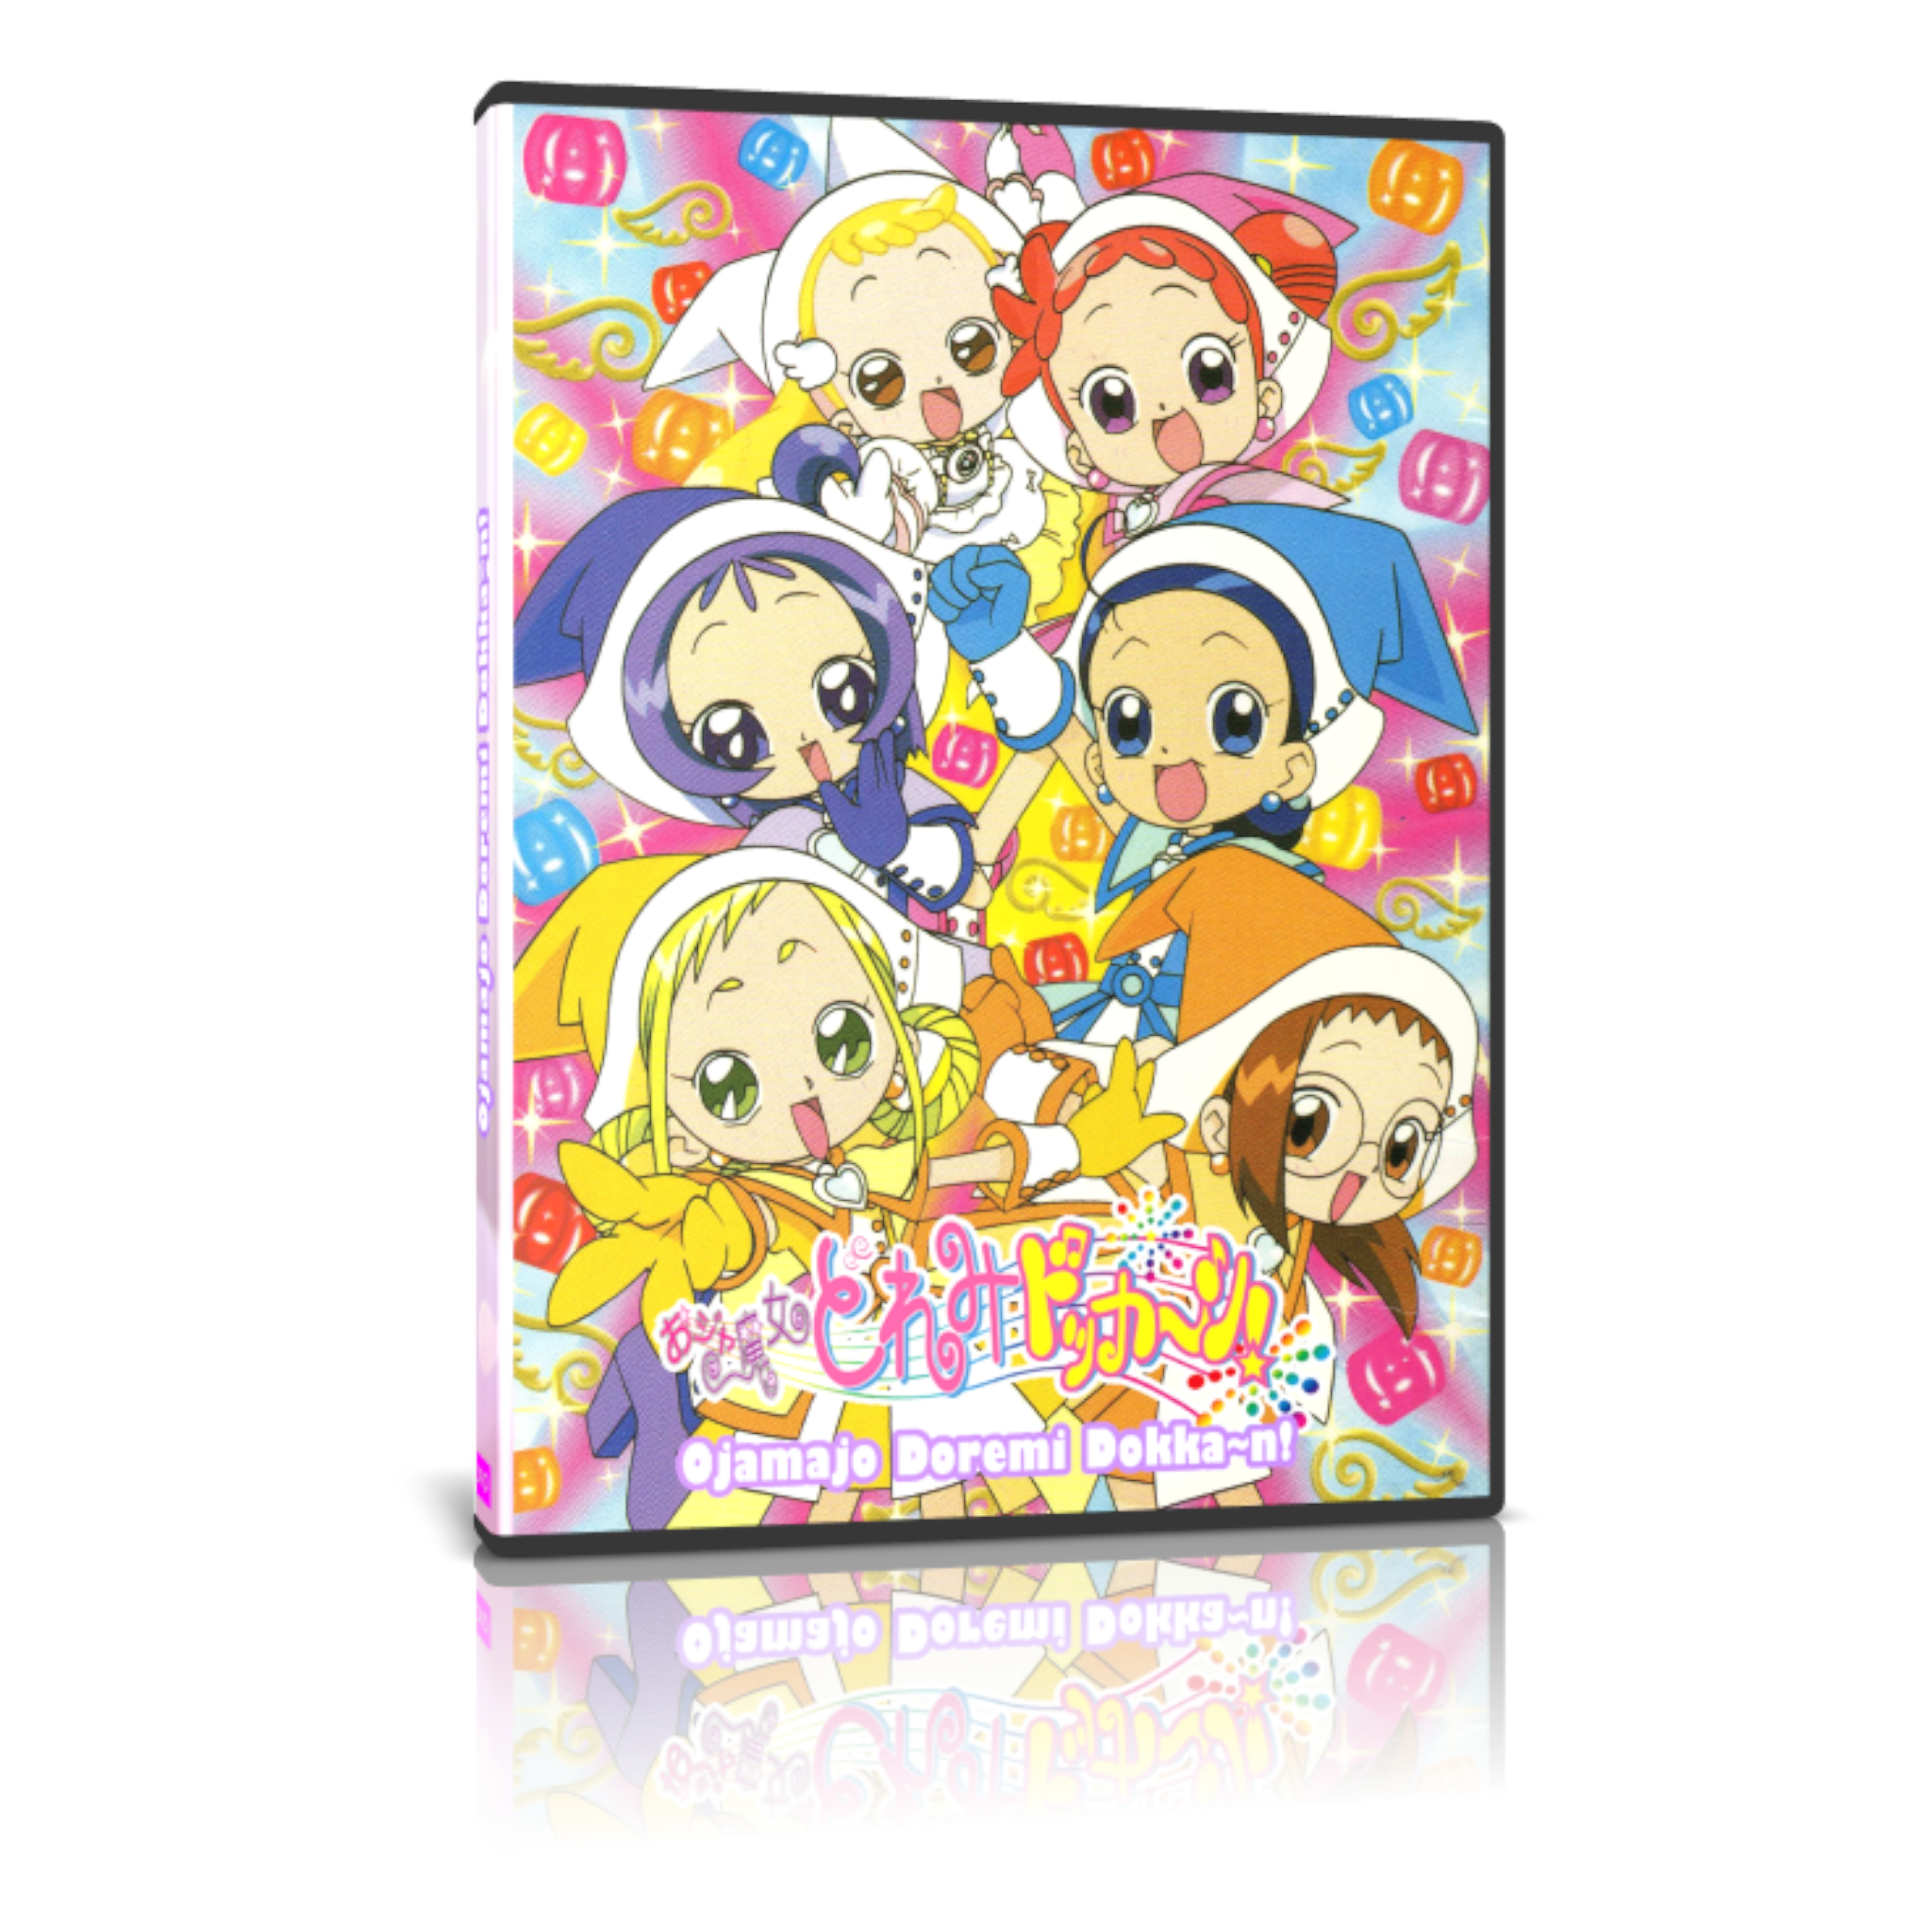 Bungo Stray Dogs (Season 1-4 + OVA + Movie) ~ All Region ~ English Dubbed ~  DVD